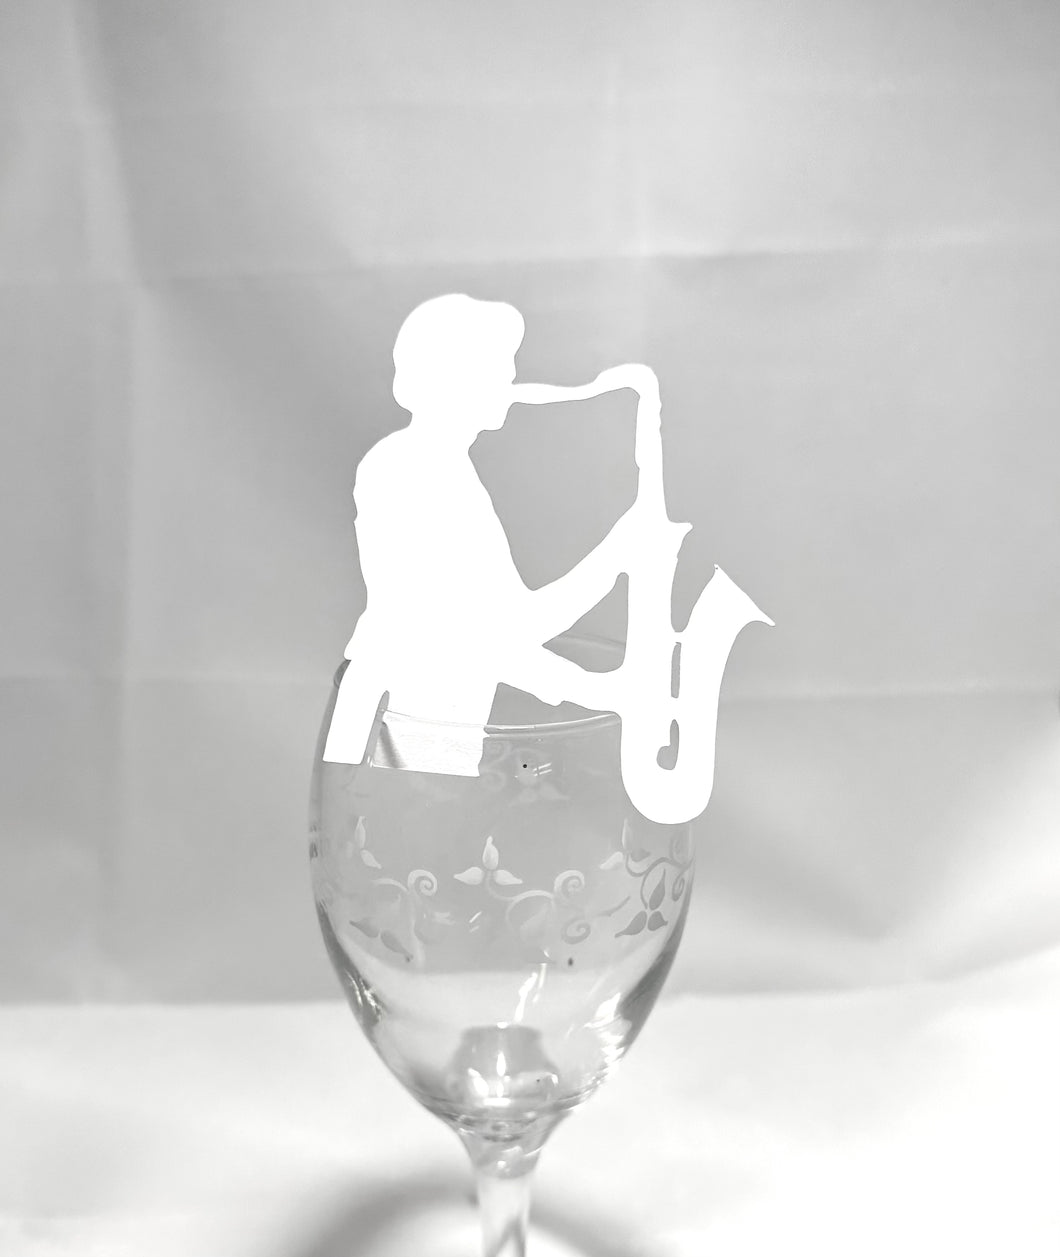 Dreng med saxofon bordkort